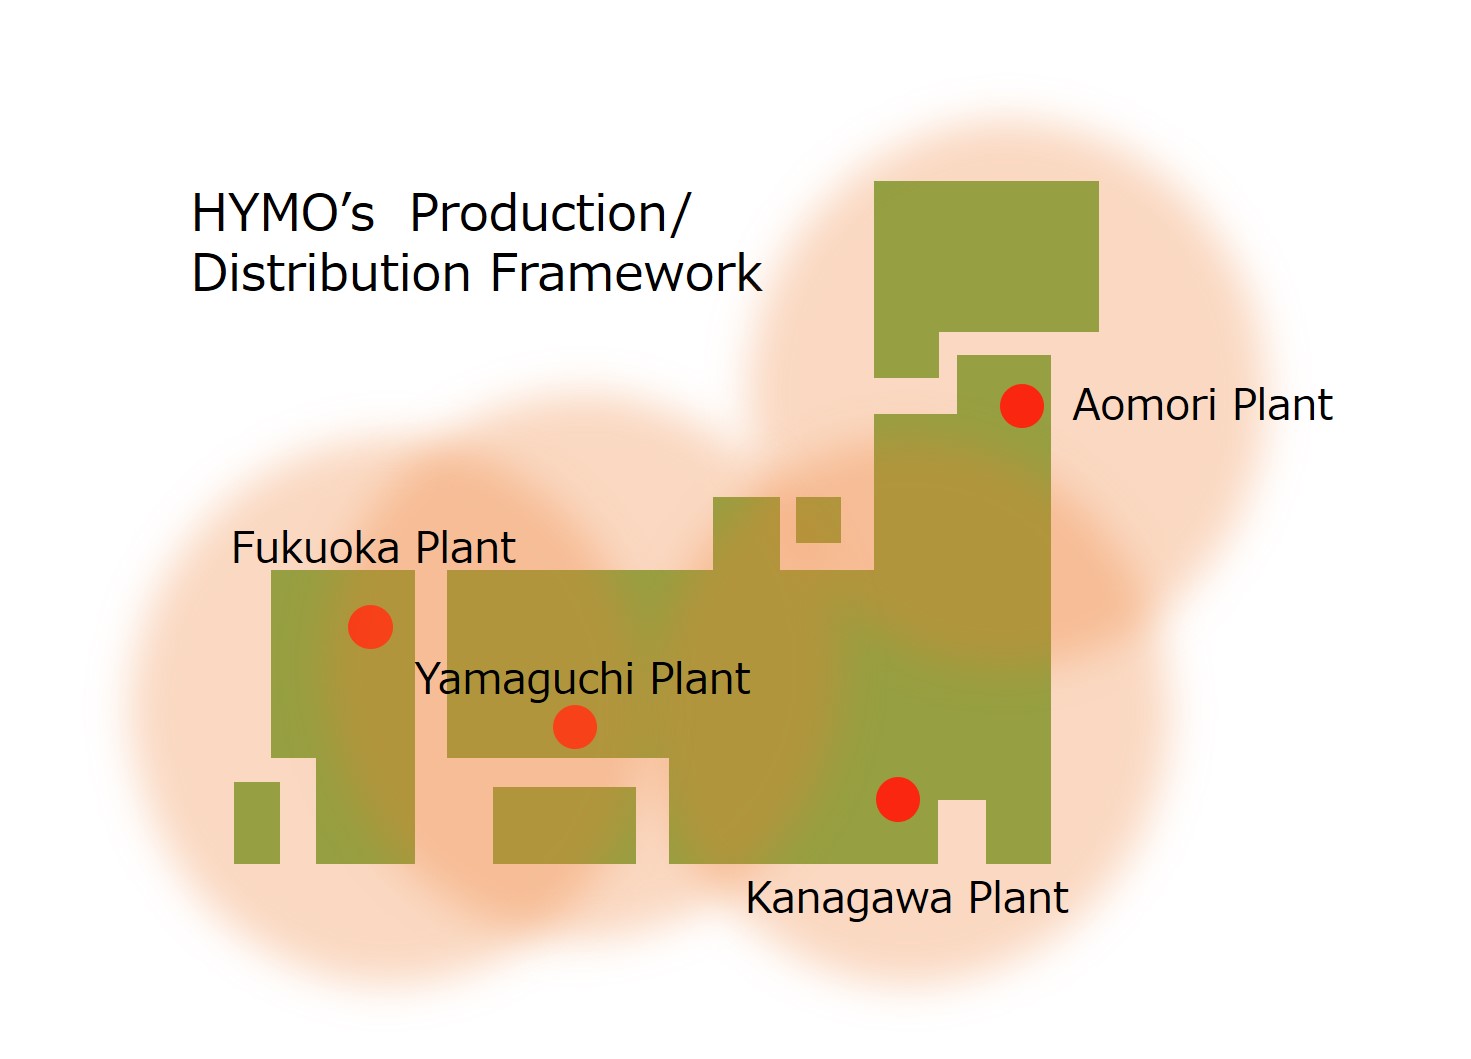 Hymo’s Production/Distribution Framework